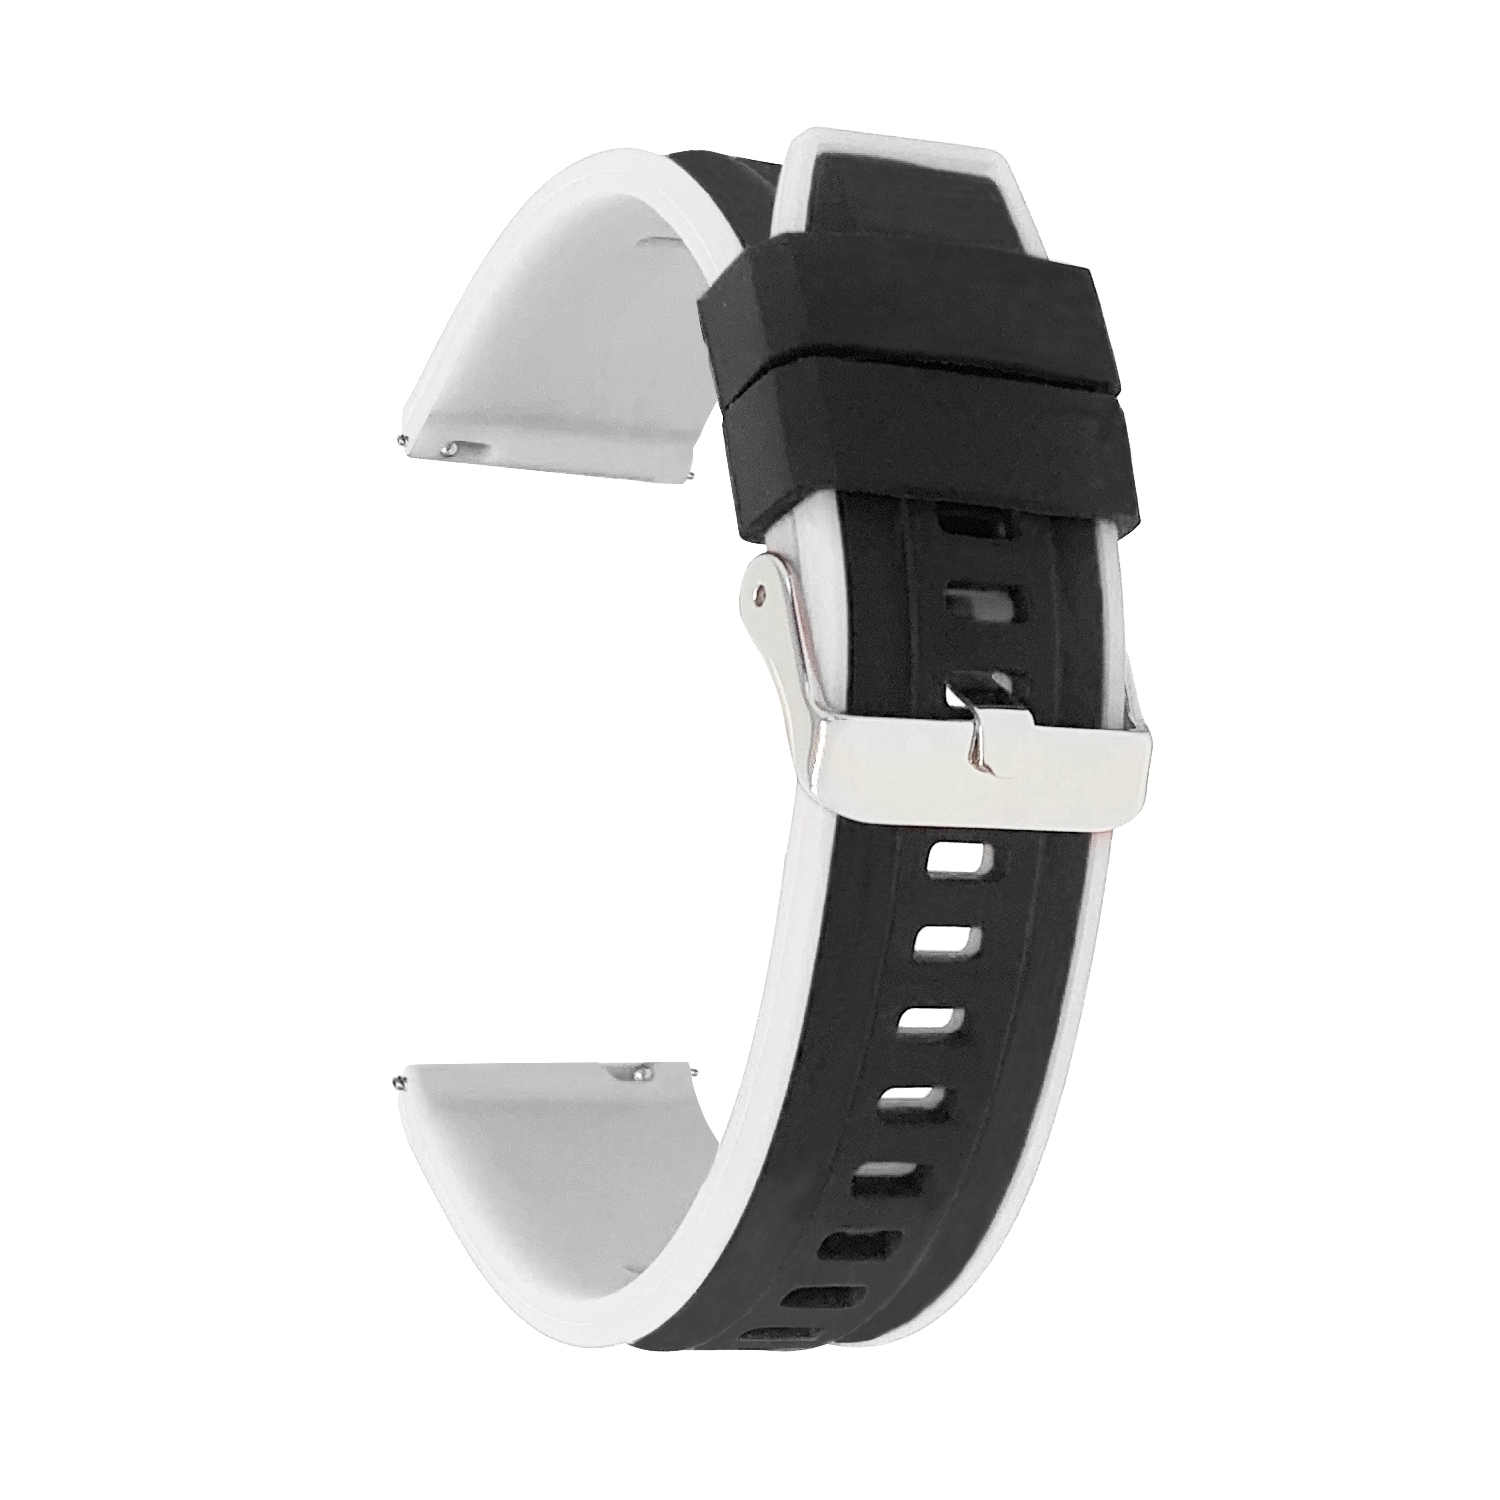 Bandini Quick Release Two-Tone Rubber Silicone Smart Watch Strap For Amazfit Bip, U, S, Lite, GTR 42mm, GTS - 20mm, Black / White / Silver Buckle